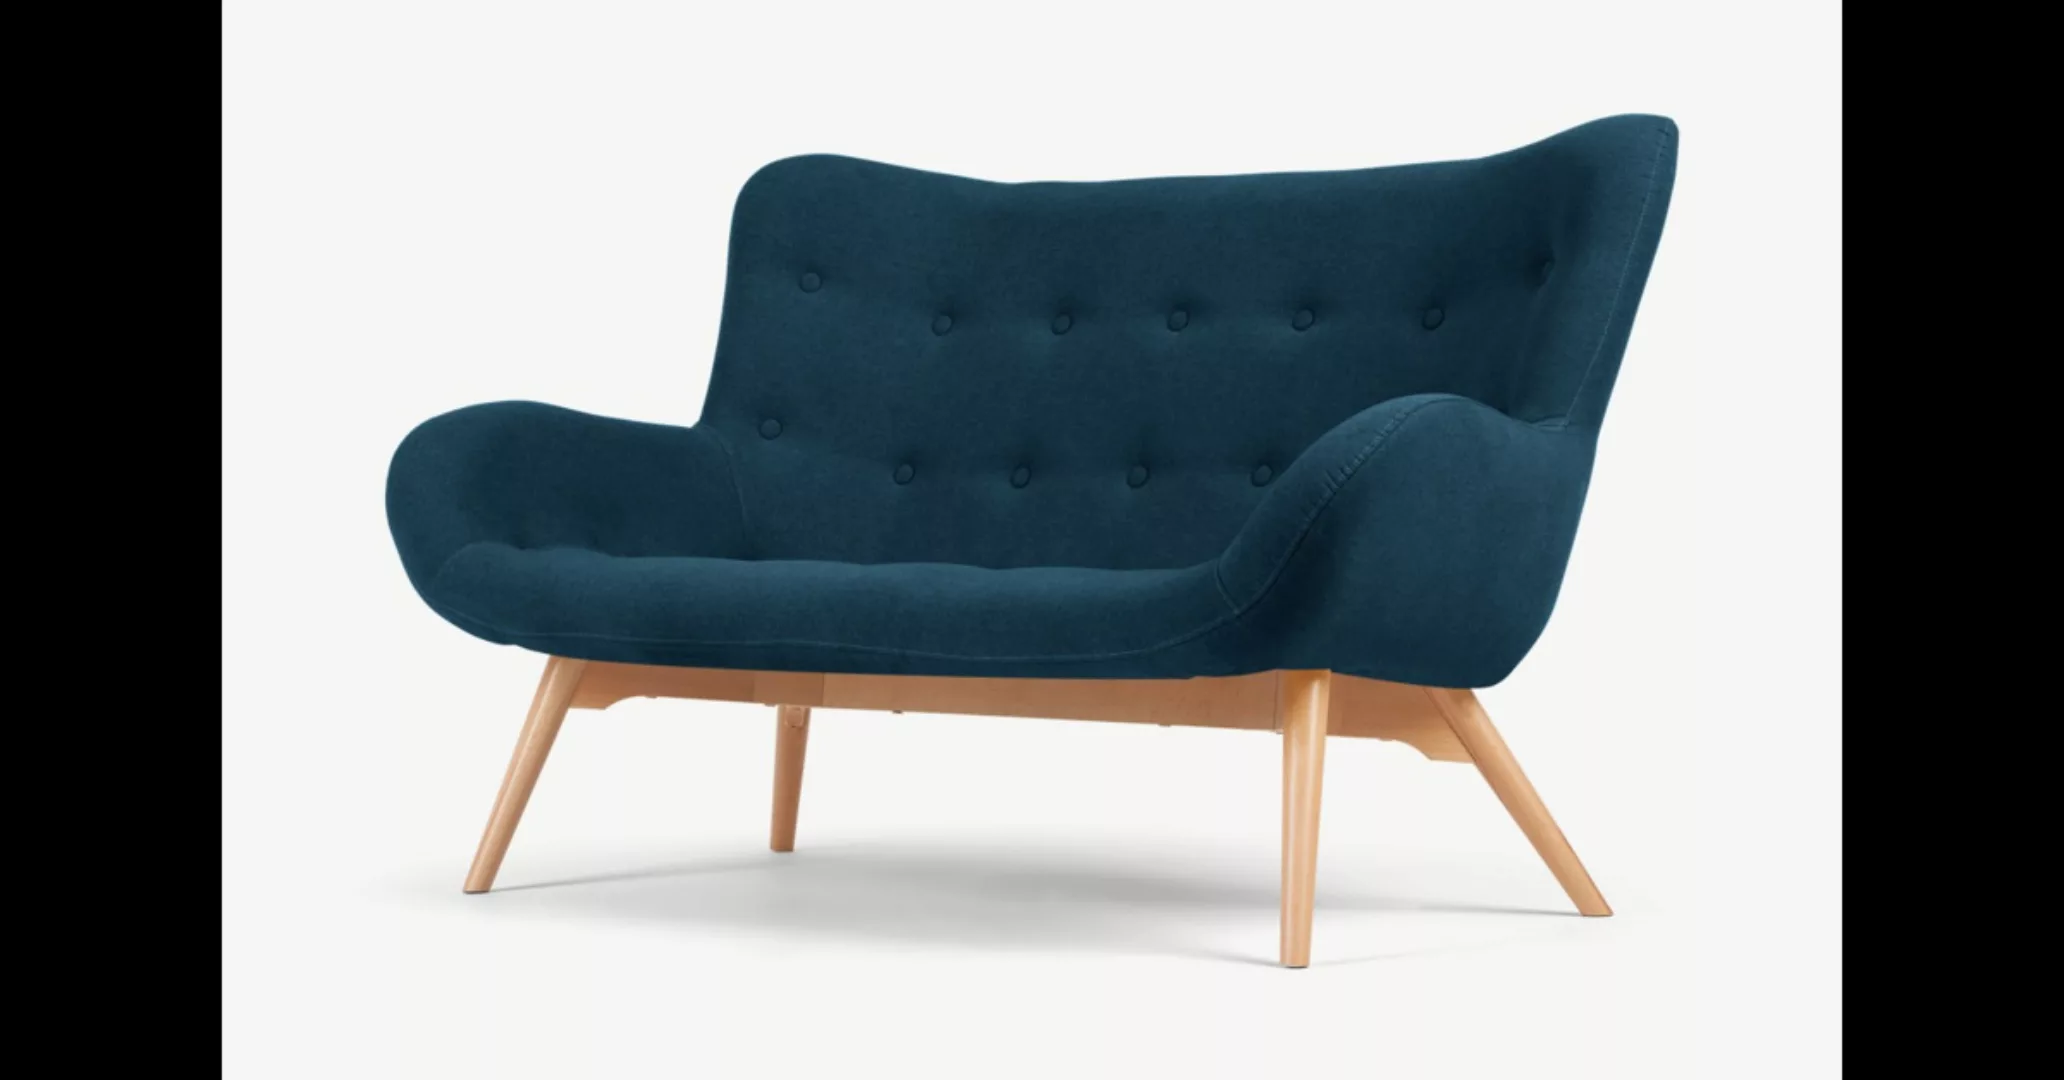 Doris 2-Sitzer Sofa, Shetlandblau - MADE.com günstig online kaufen